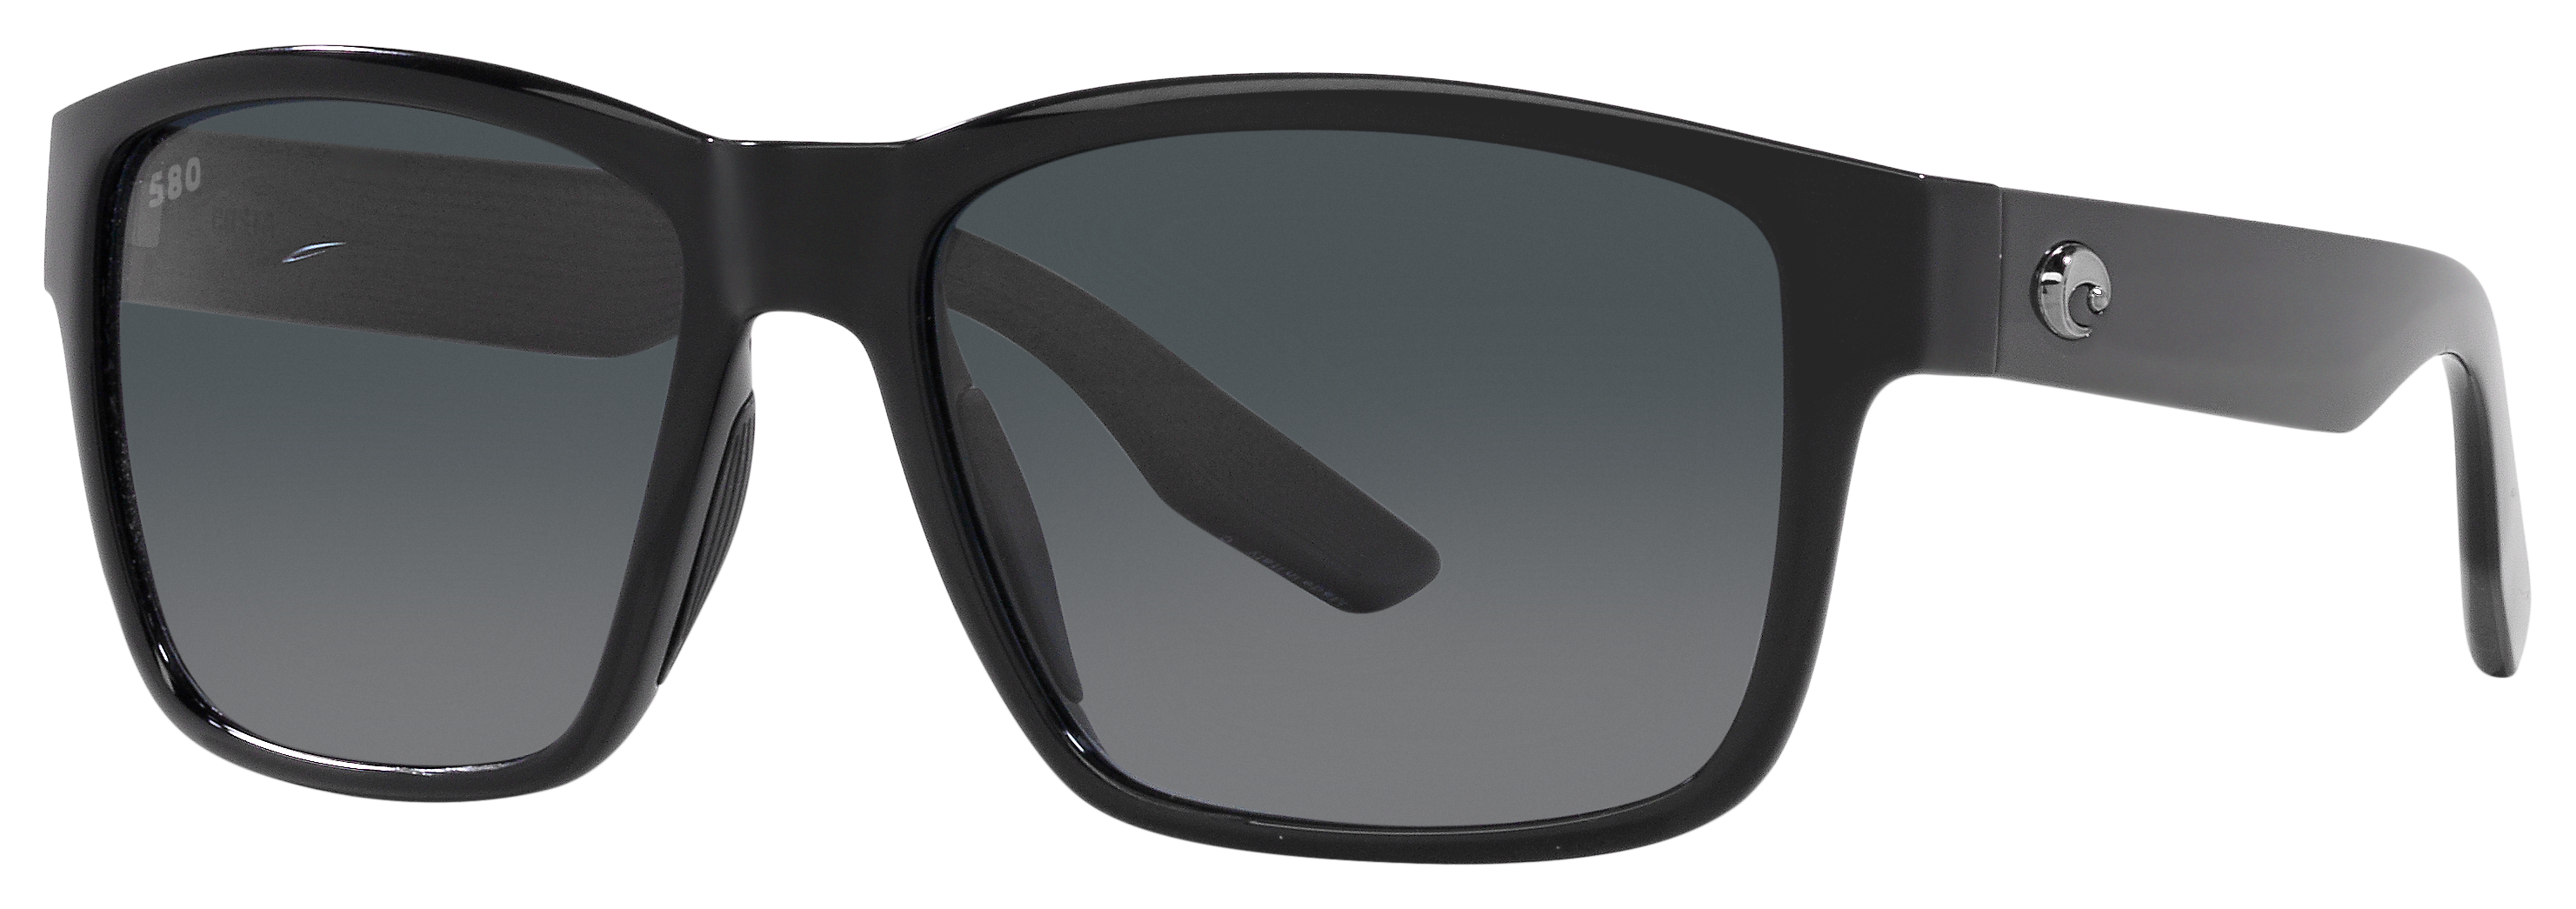 Costa Del Mar Paunch XL 580G Glass Polarized Sunglasses - Black/Gray Gradient - X-Large